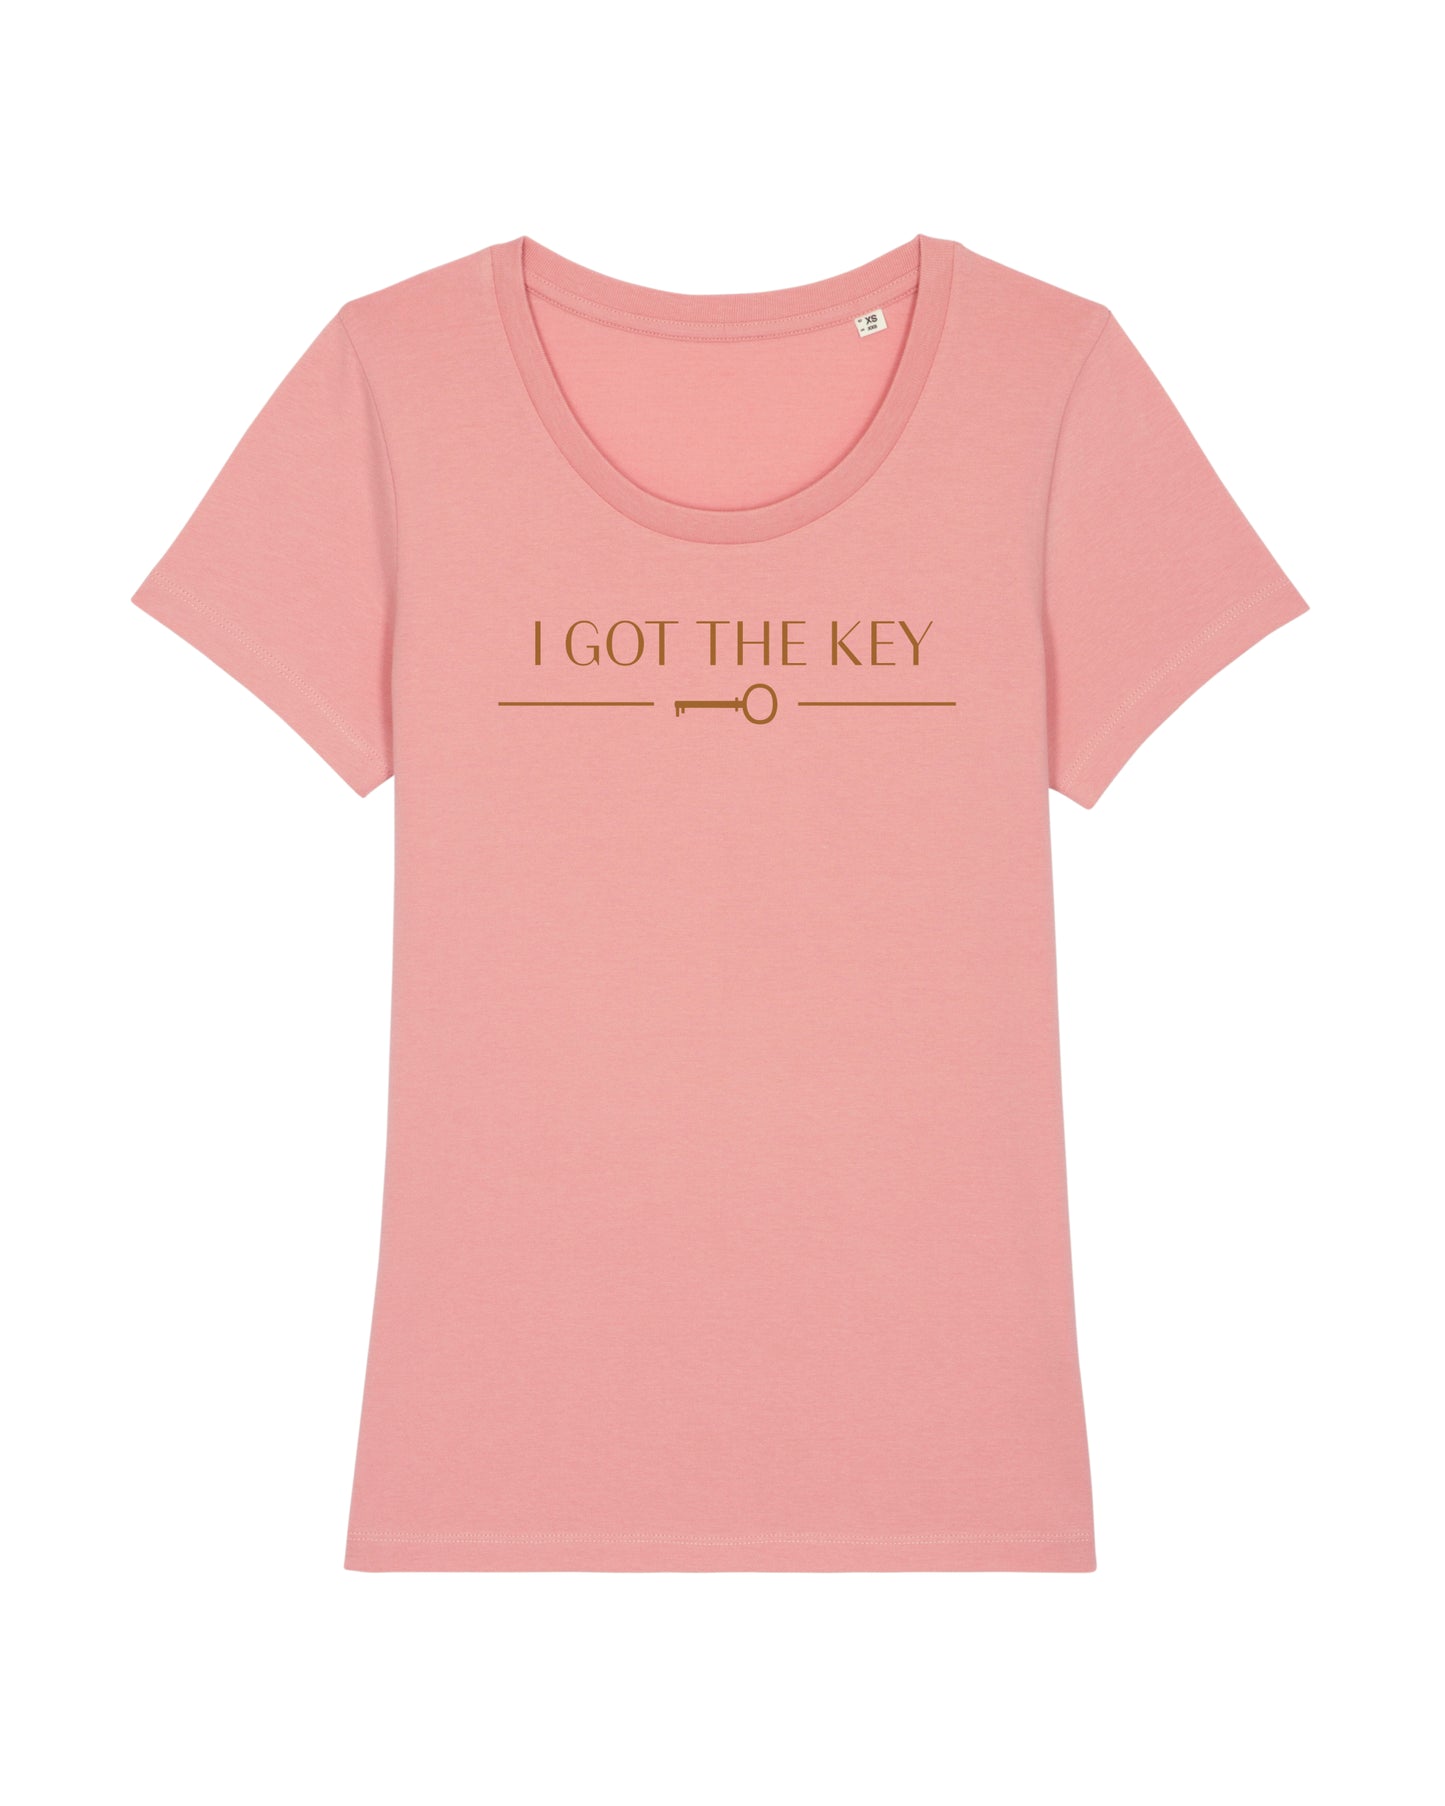 Damen-T-Shirt in softem pink mit goldenem I GOT THE KEY Druck